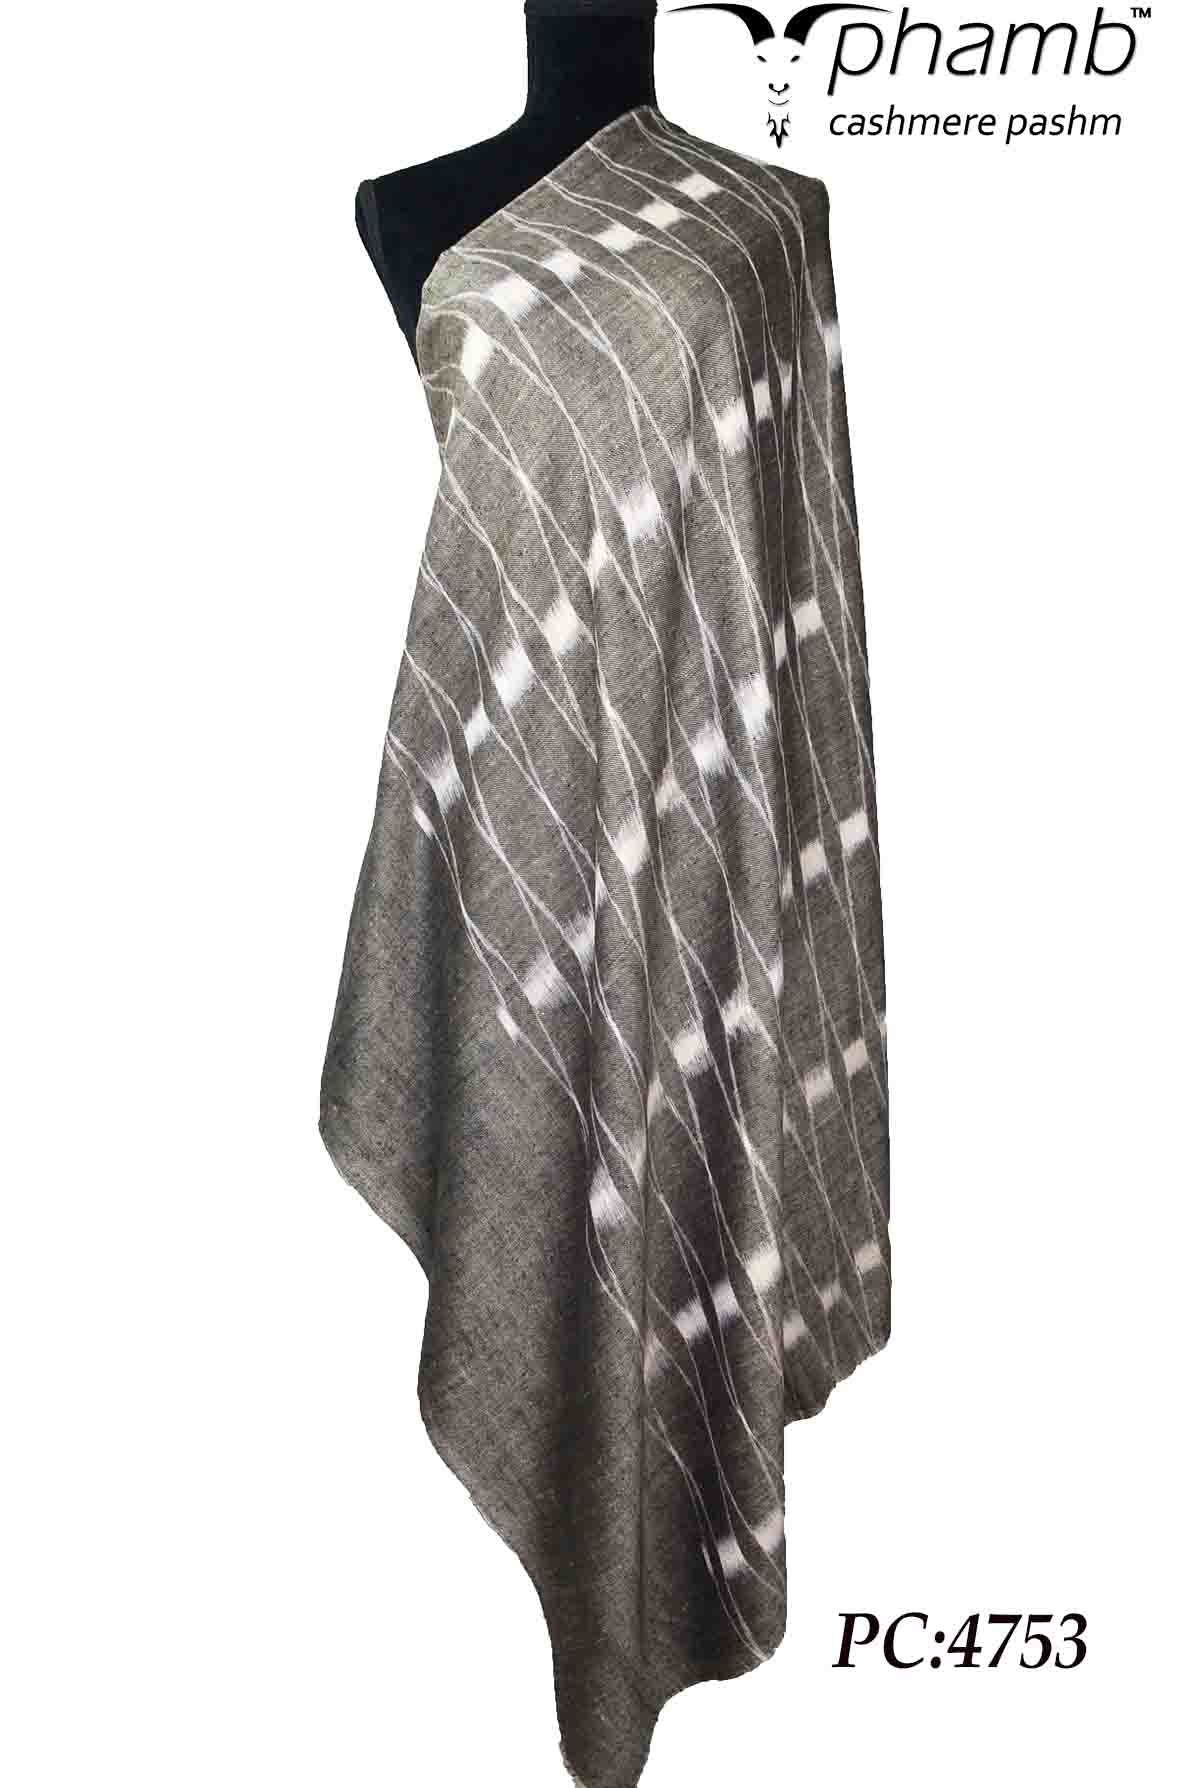 ekat design shawl - 4753